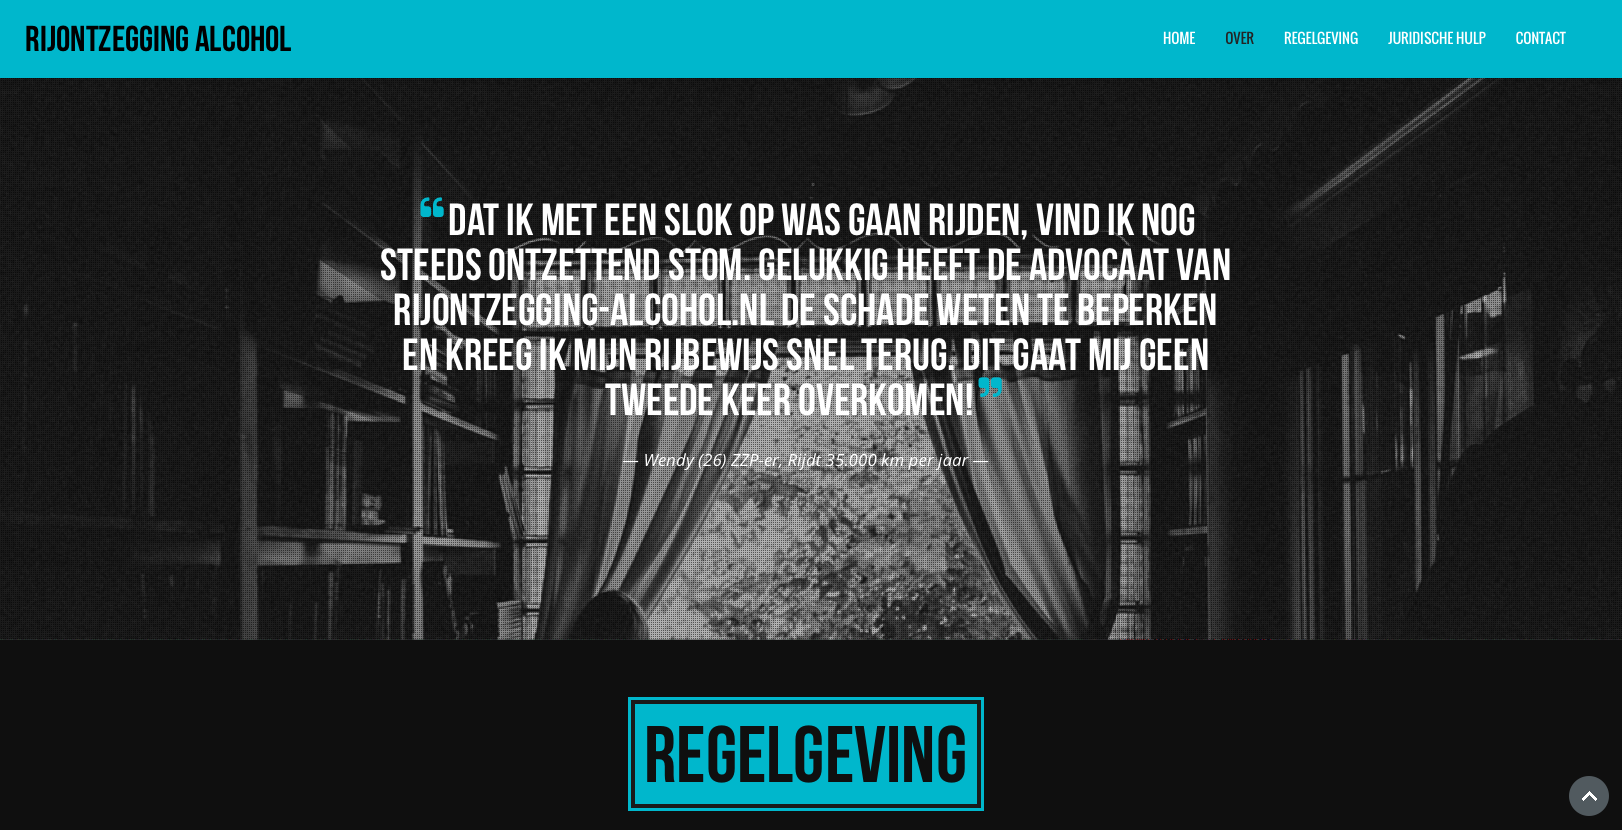 Rijontzegging-alcohol.nl